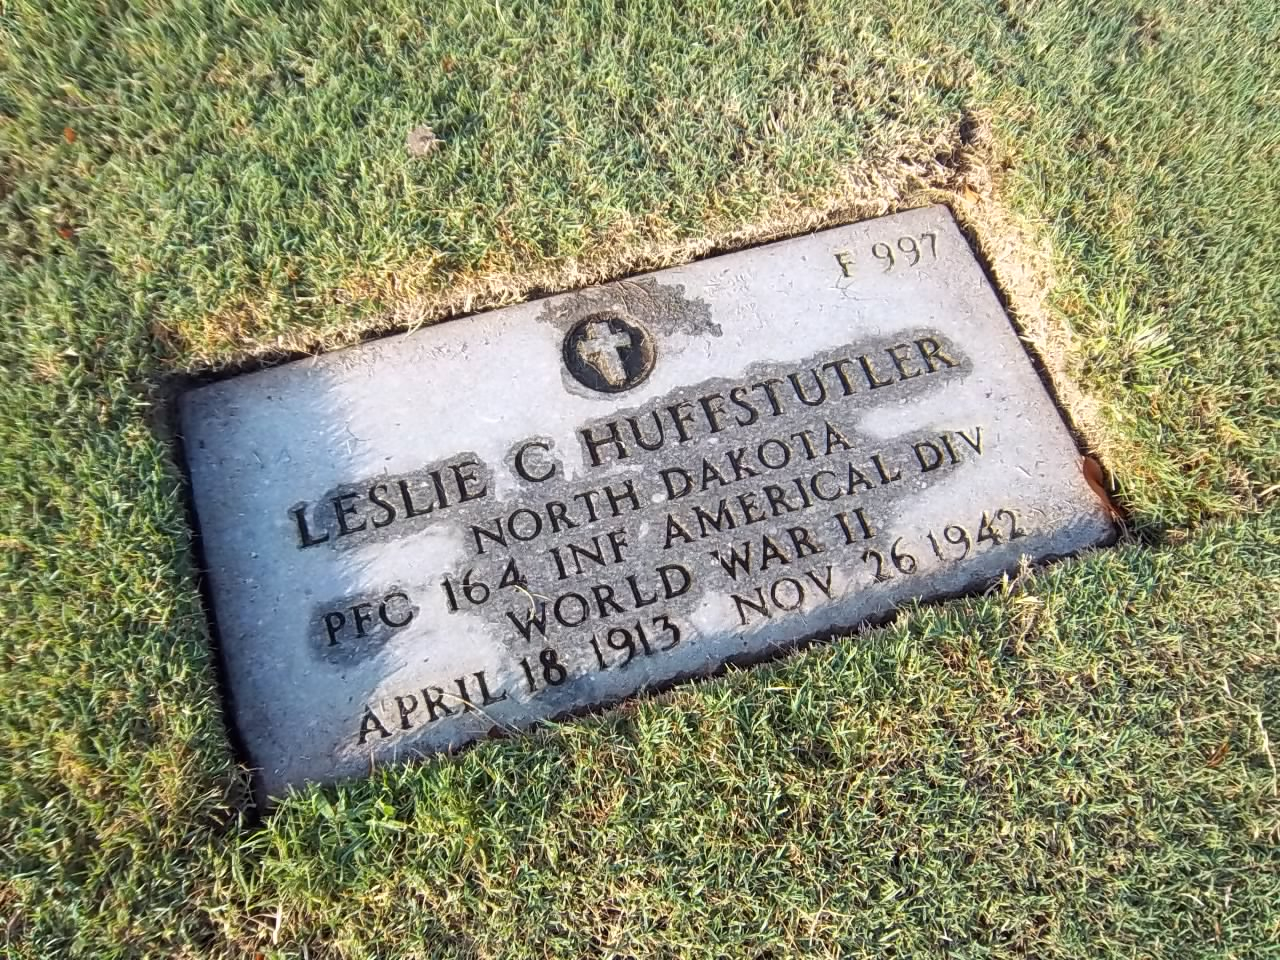 Leslie C. Huffstutler photo